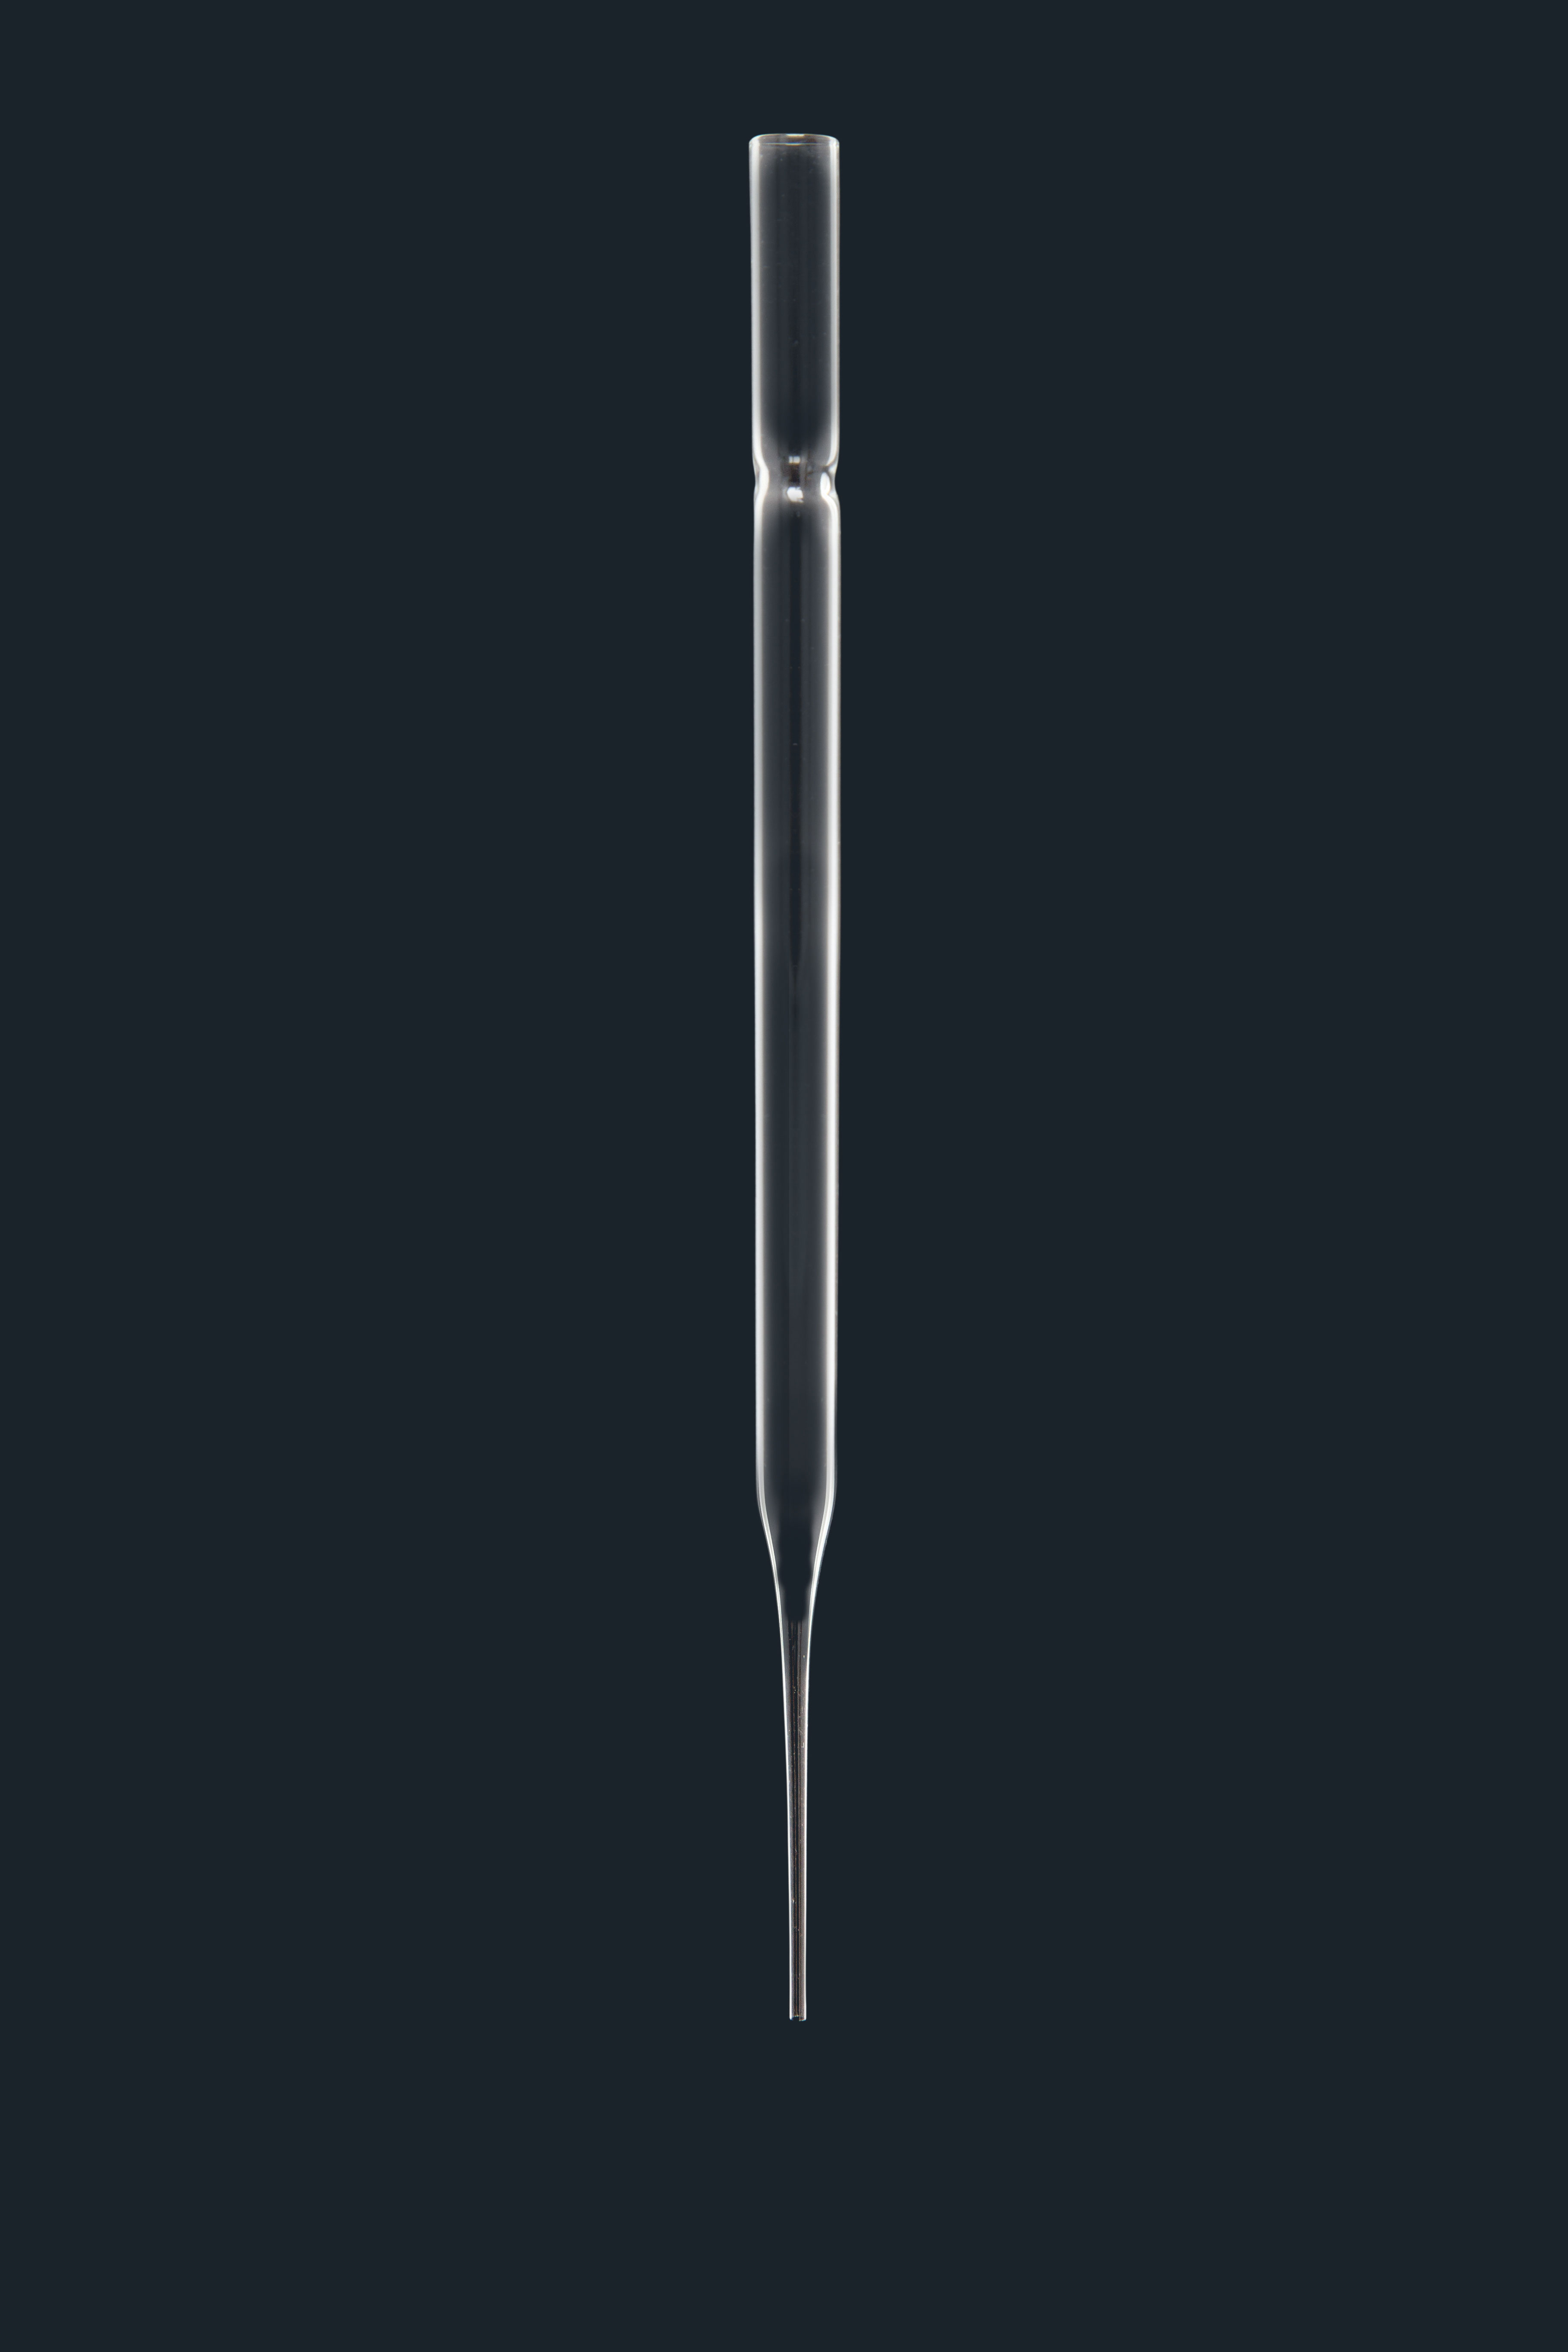 Pipeta Pasteur de vidrio Scharlau long. 160mm cortas. Longitud de la punta 60 mm